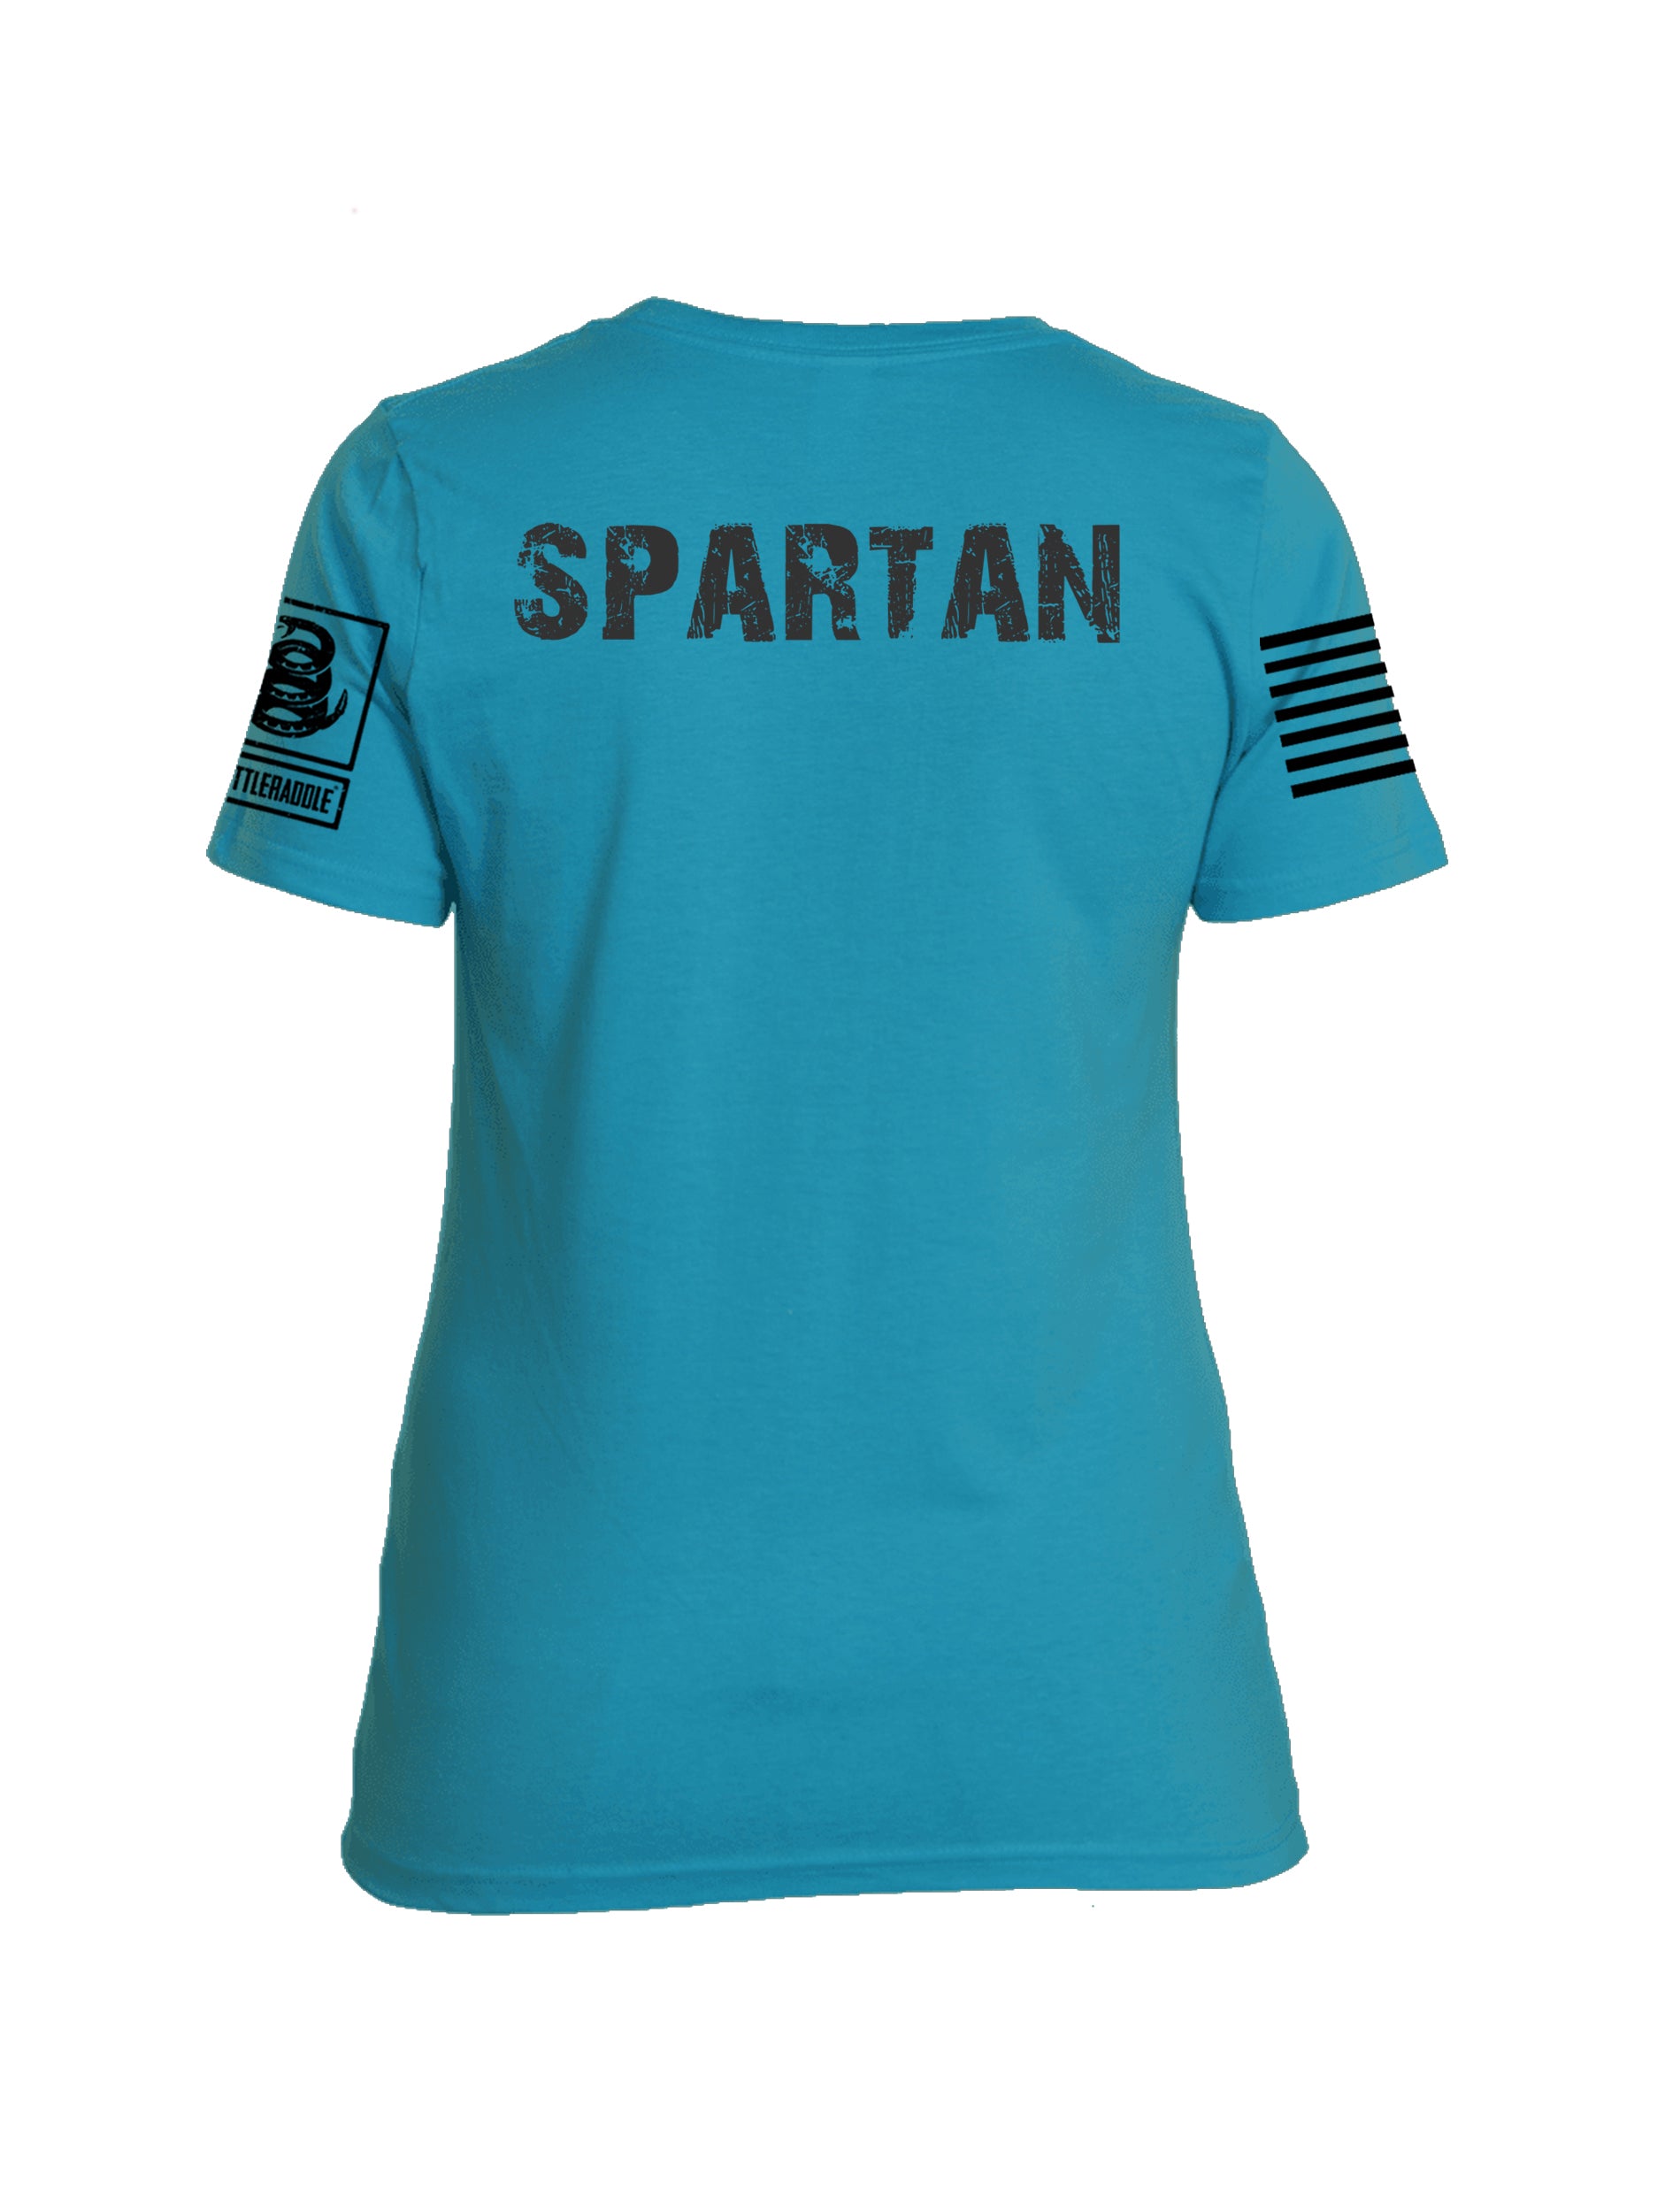 Batttleraddle Vintage Spartan Black Sleeve Print Womens Cotton Crew Neck T Shirt